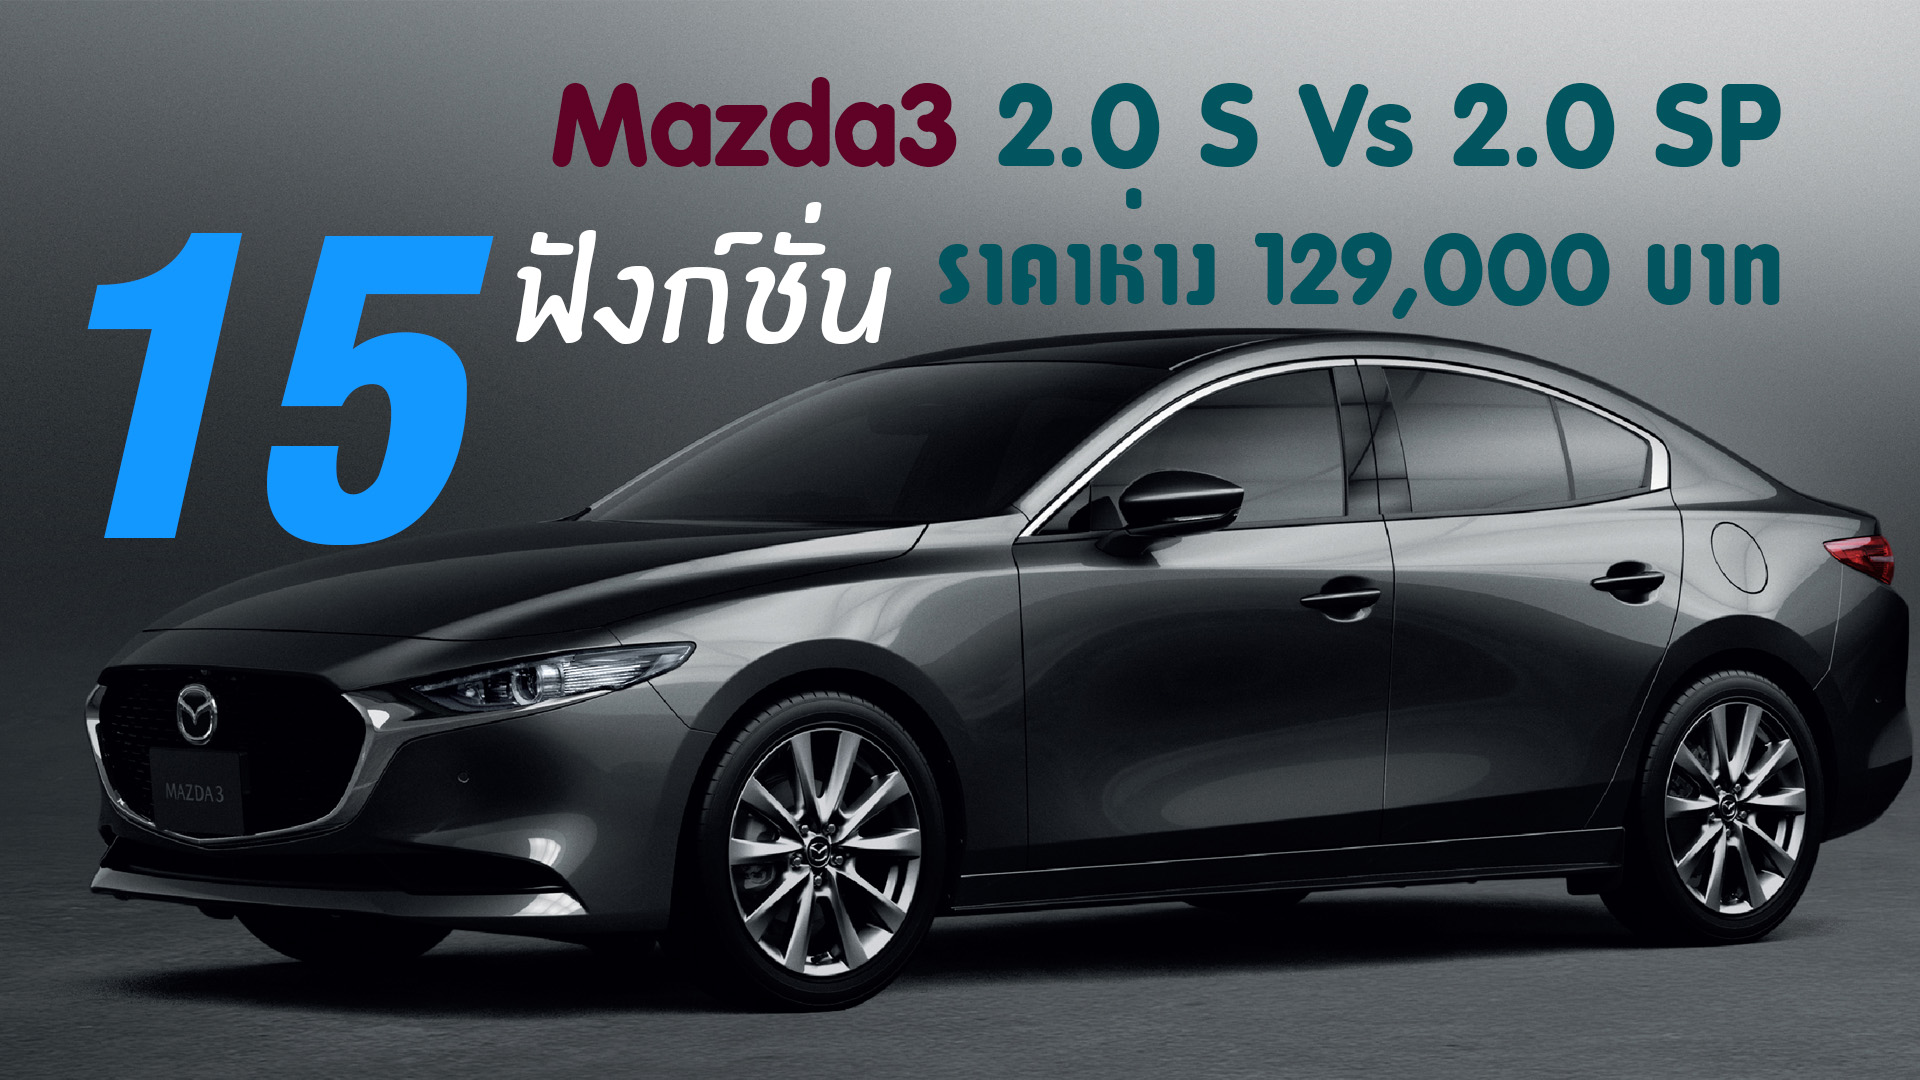 Mazda3 2.0 S Vs 2.0 SP เพิ่ม 15 ฟังก์ชั่น ราคาห่างกัน 129,000 บาท